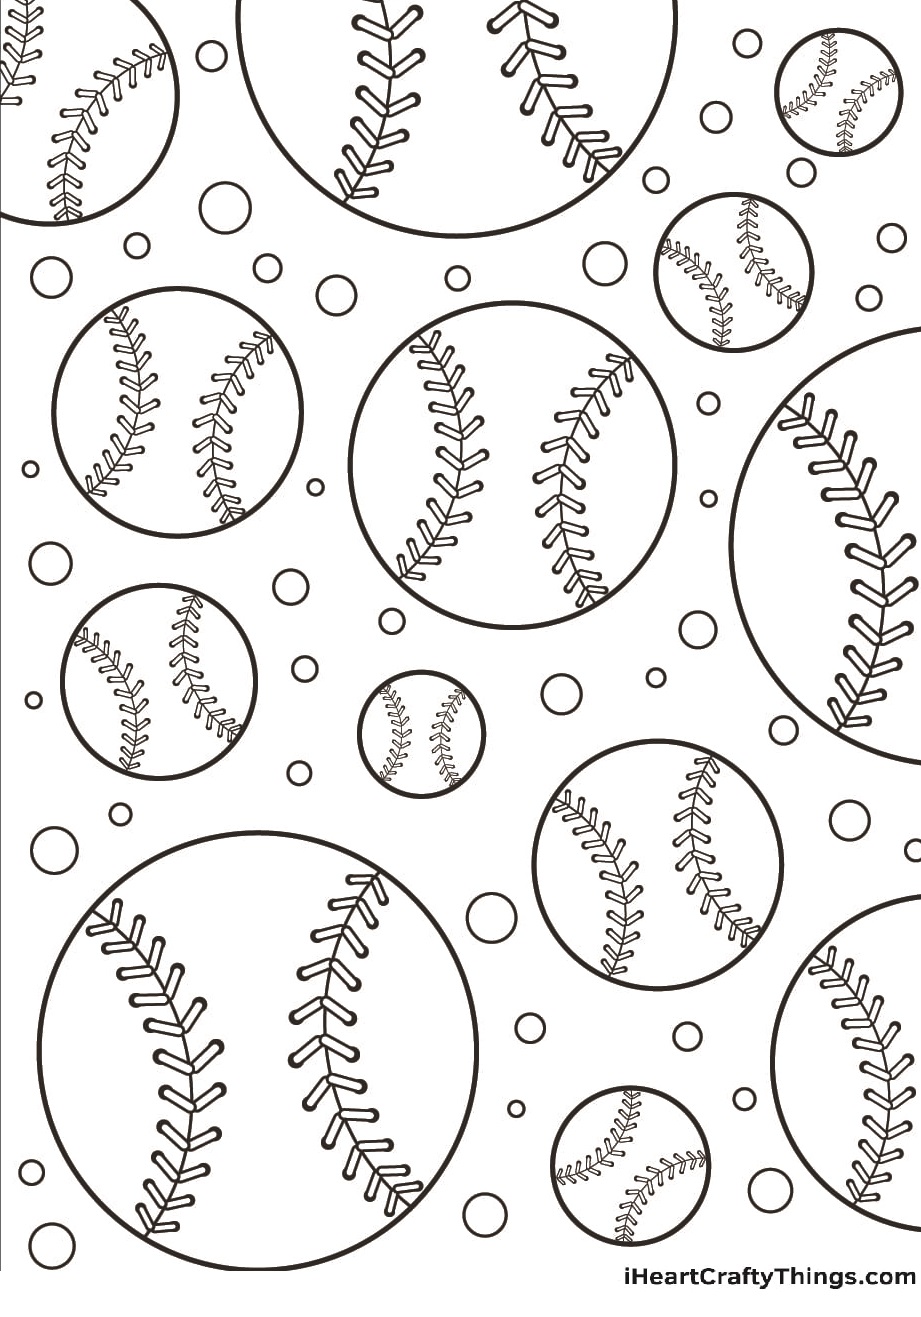 Baseball Player To Print Coloring Page